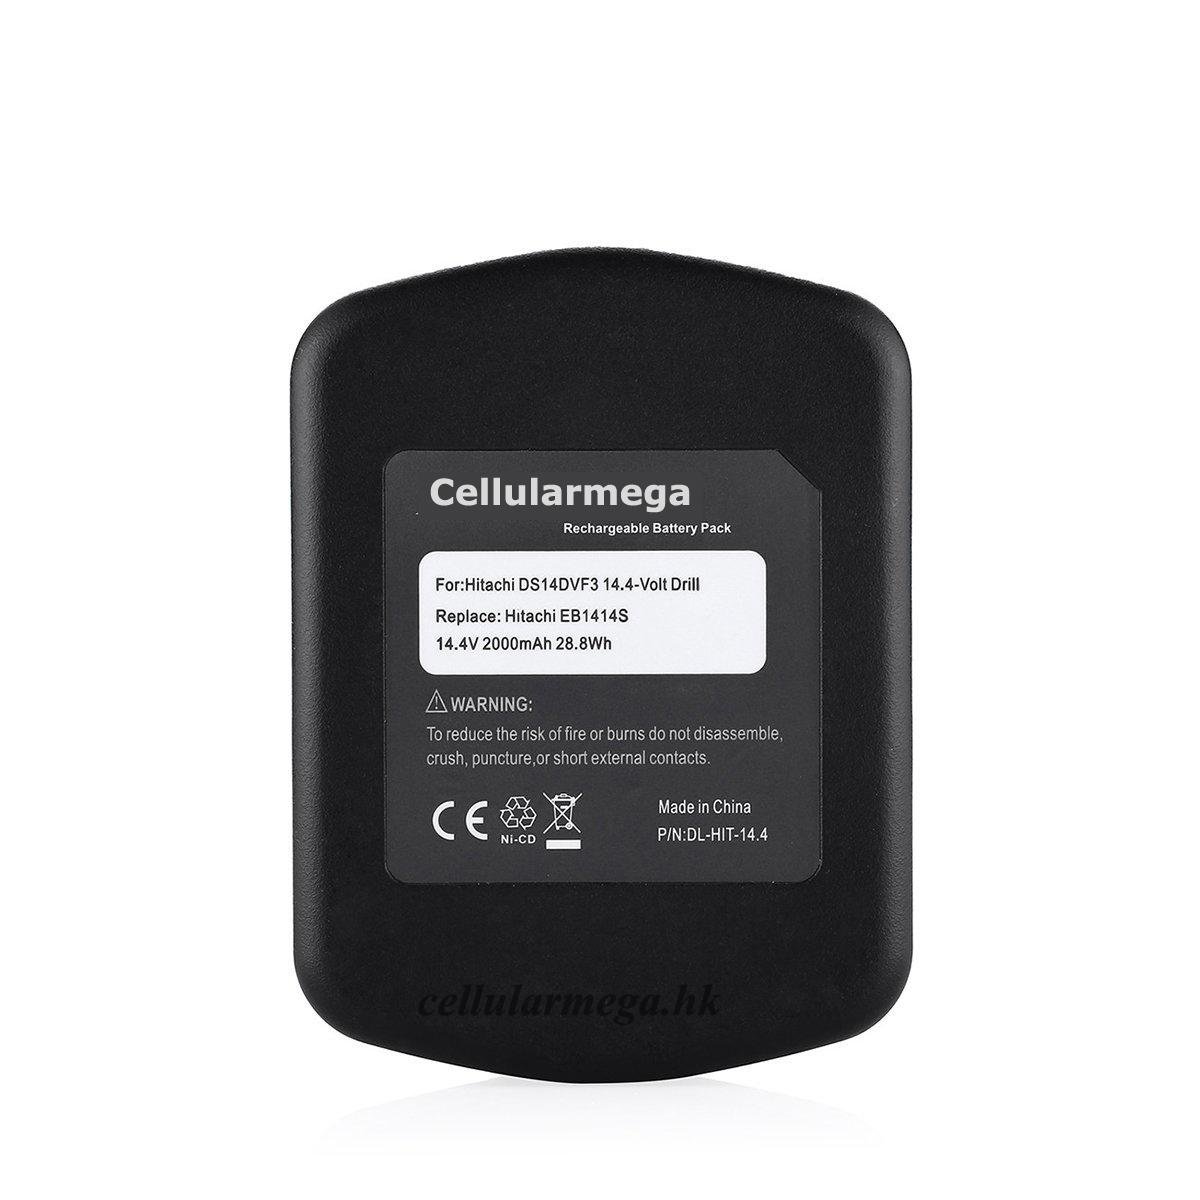 Cellularmega 14.4v 2.0Ah Replacement Battery for Hitachi 324367 EB1414S EB 1414 5